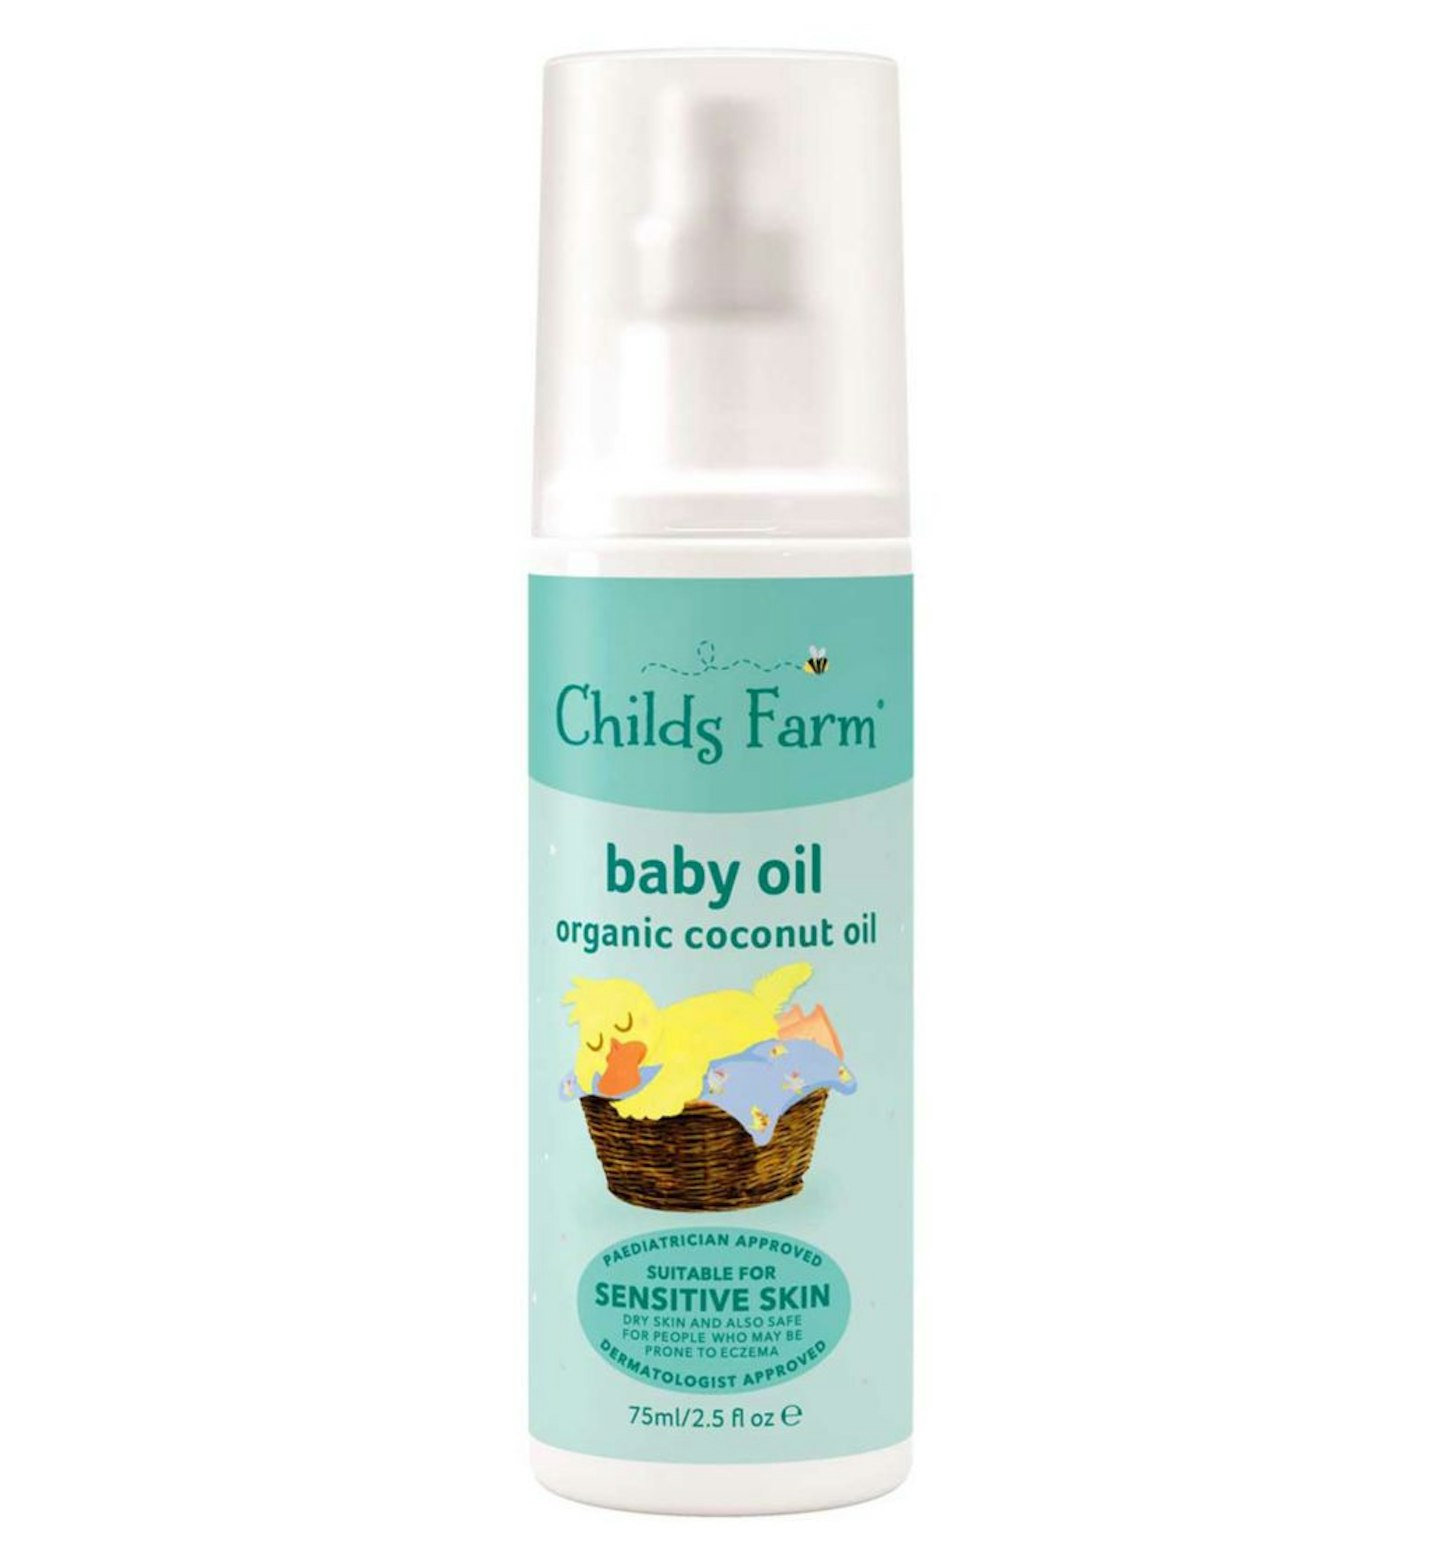  Childs Farm Baby Oil Organic Coconut, 75ml